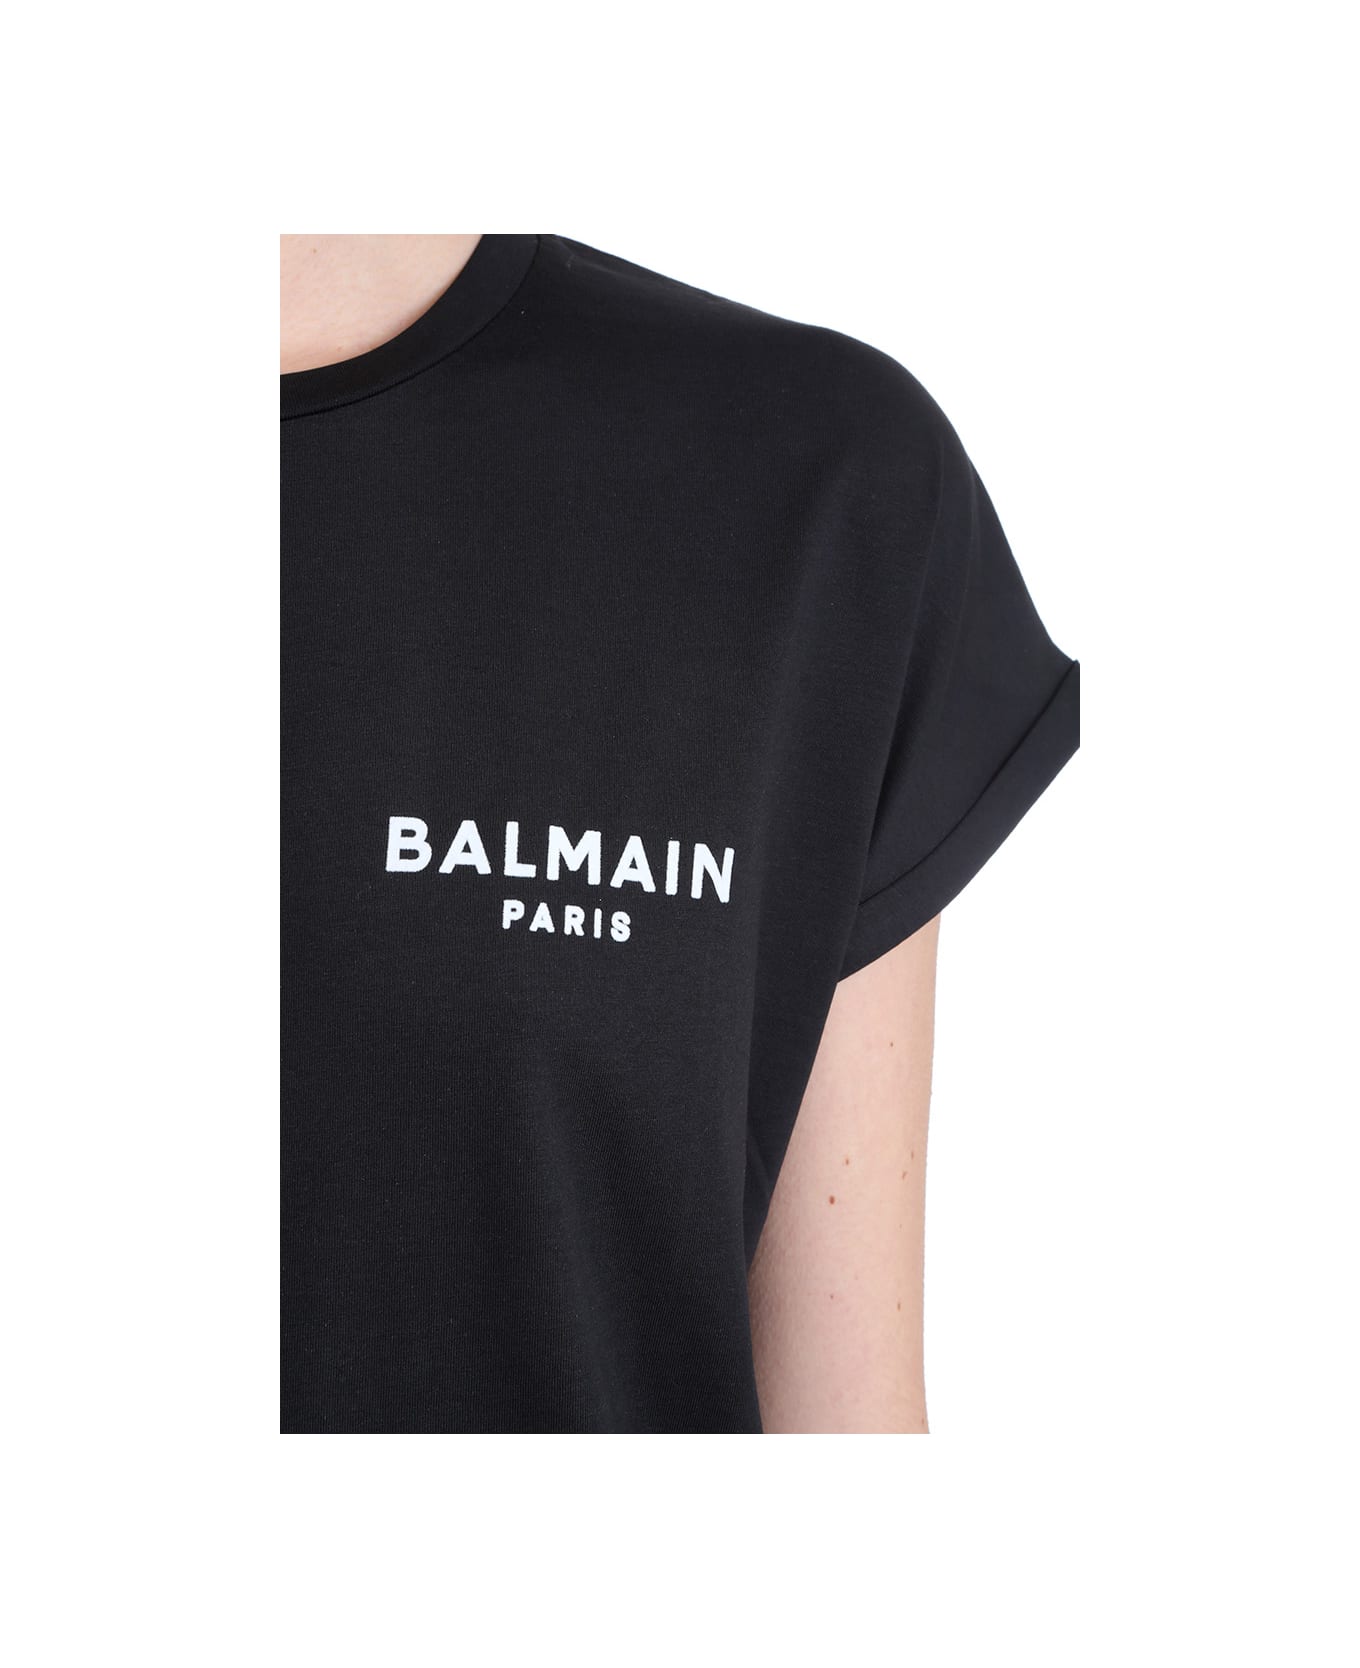 Balmain T-shirt In Black Cotton - Nero/bianco